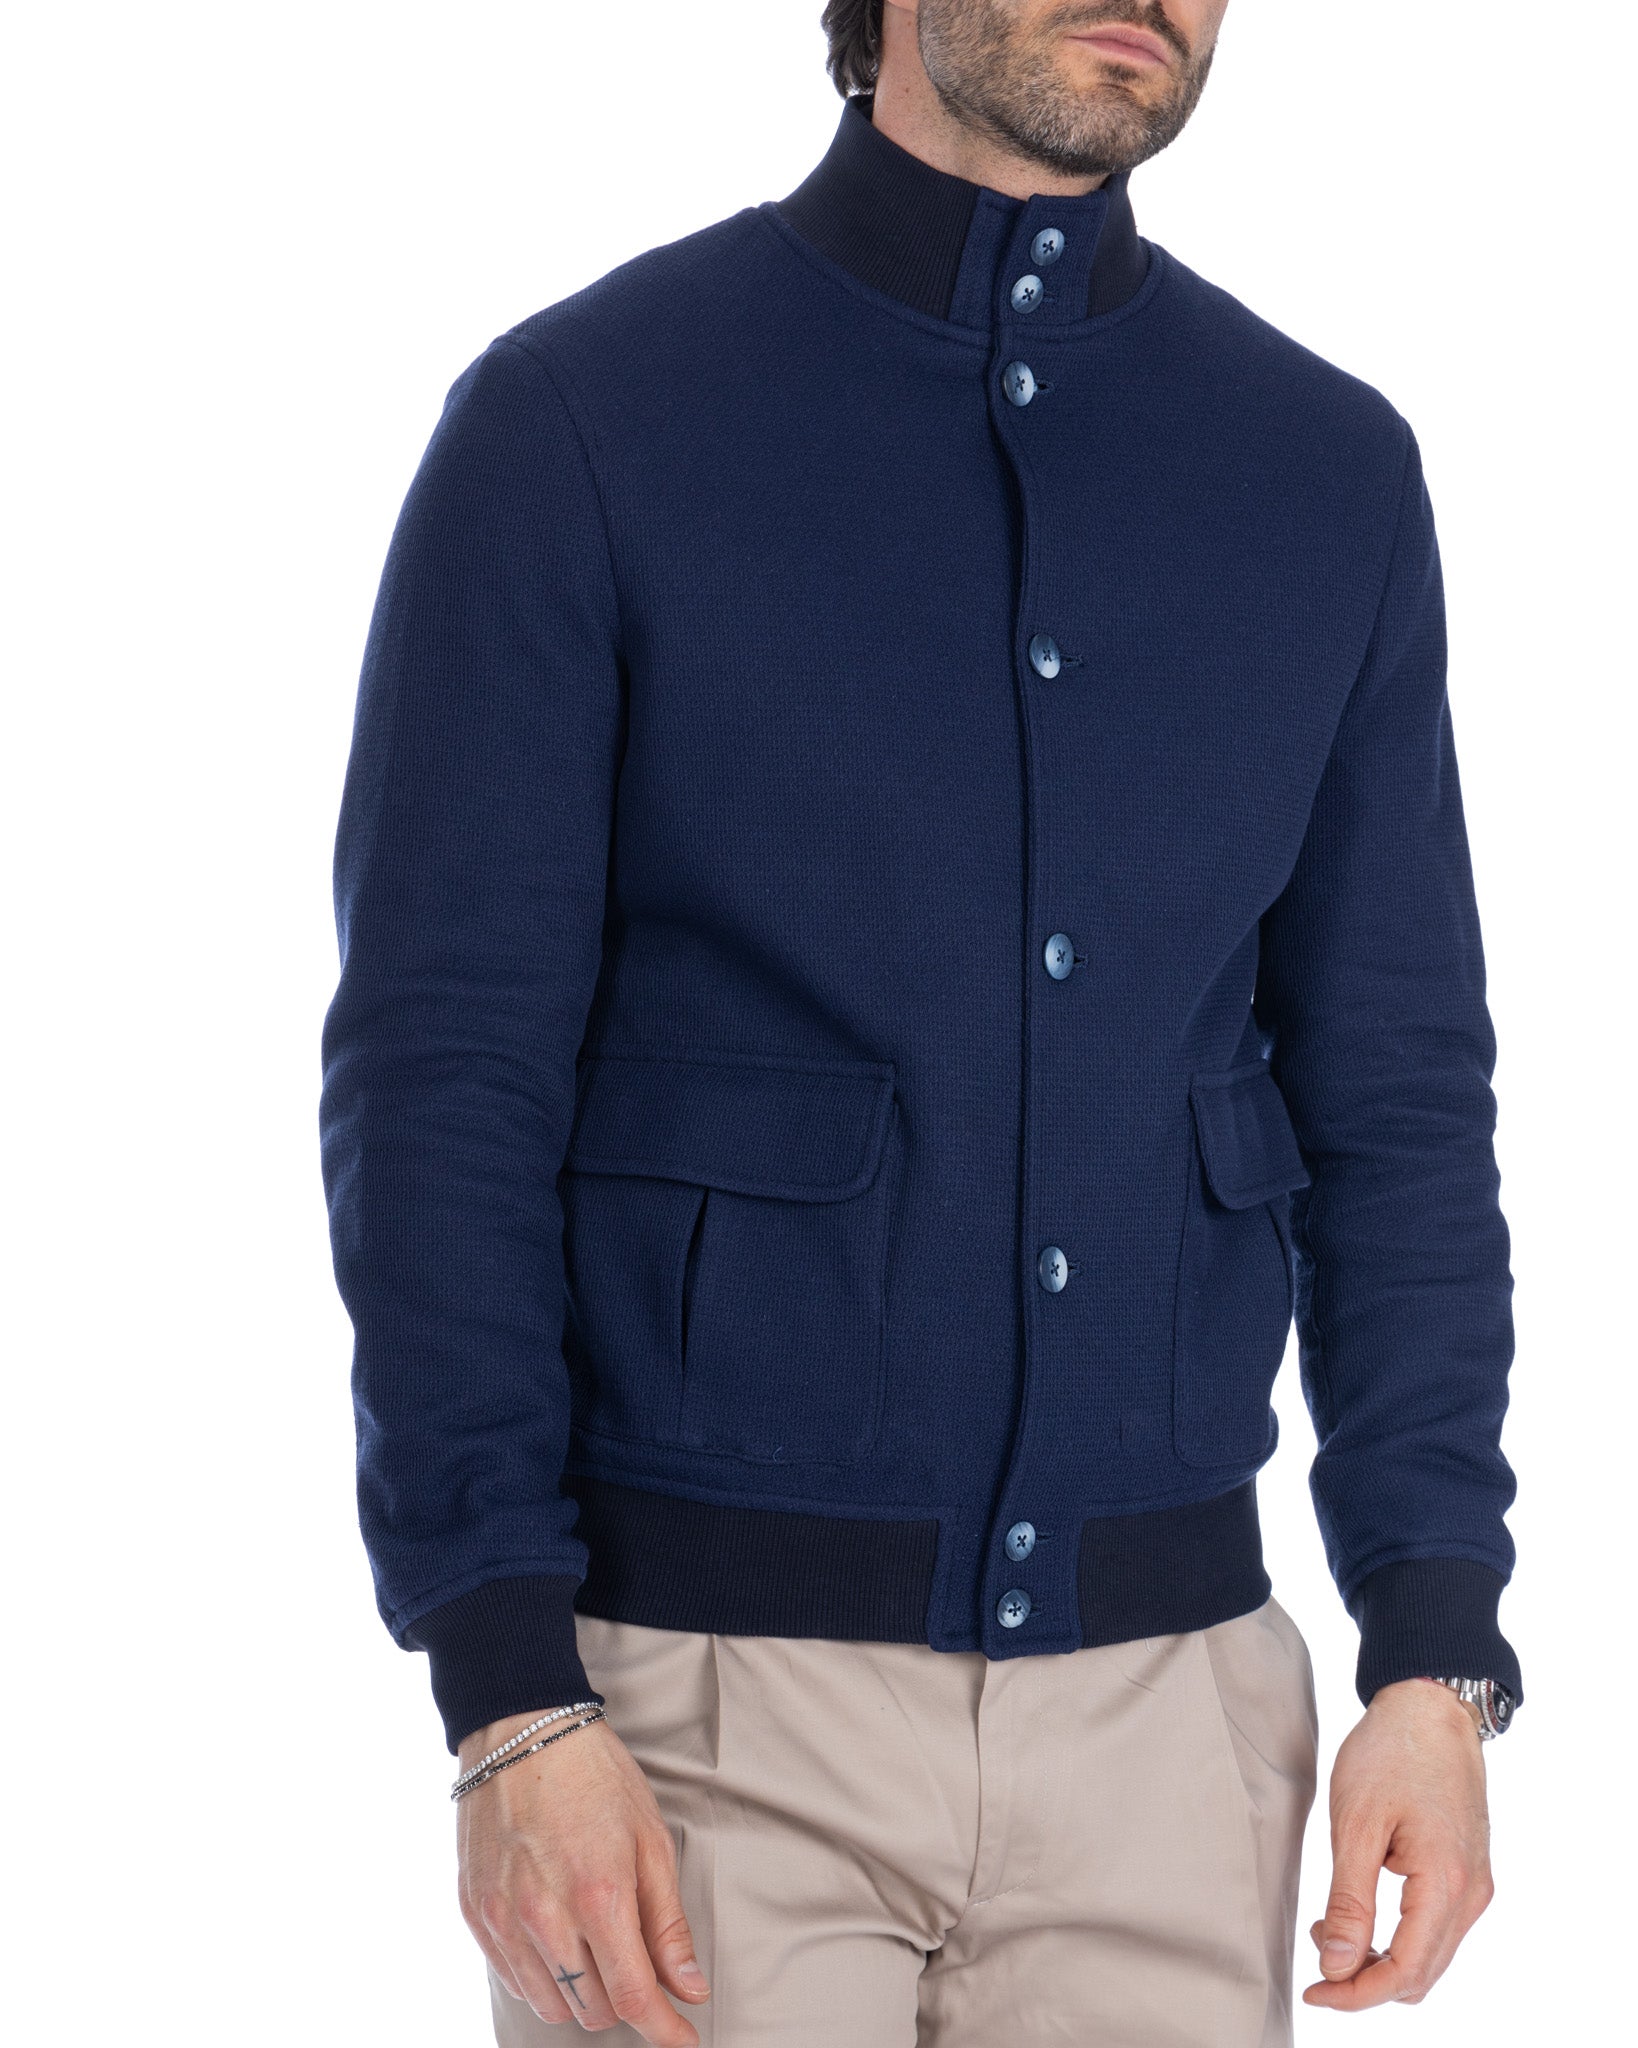 Trieste - blue cotton bomber jacket